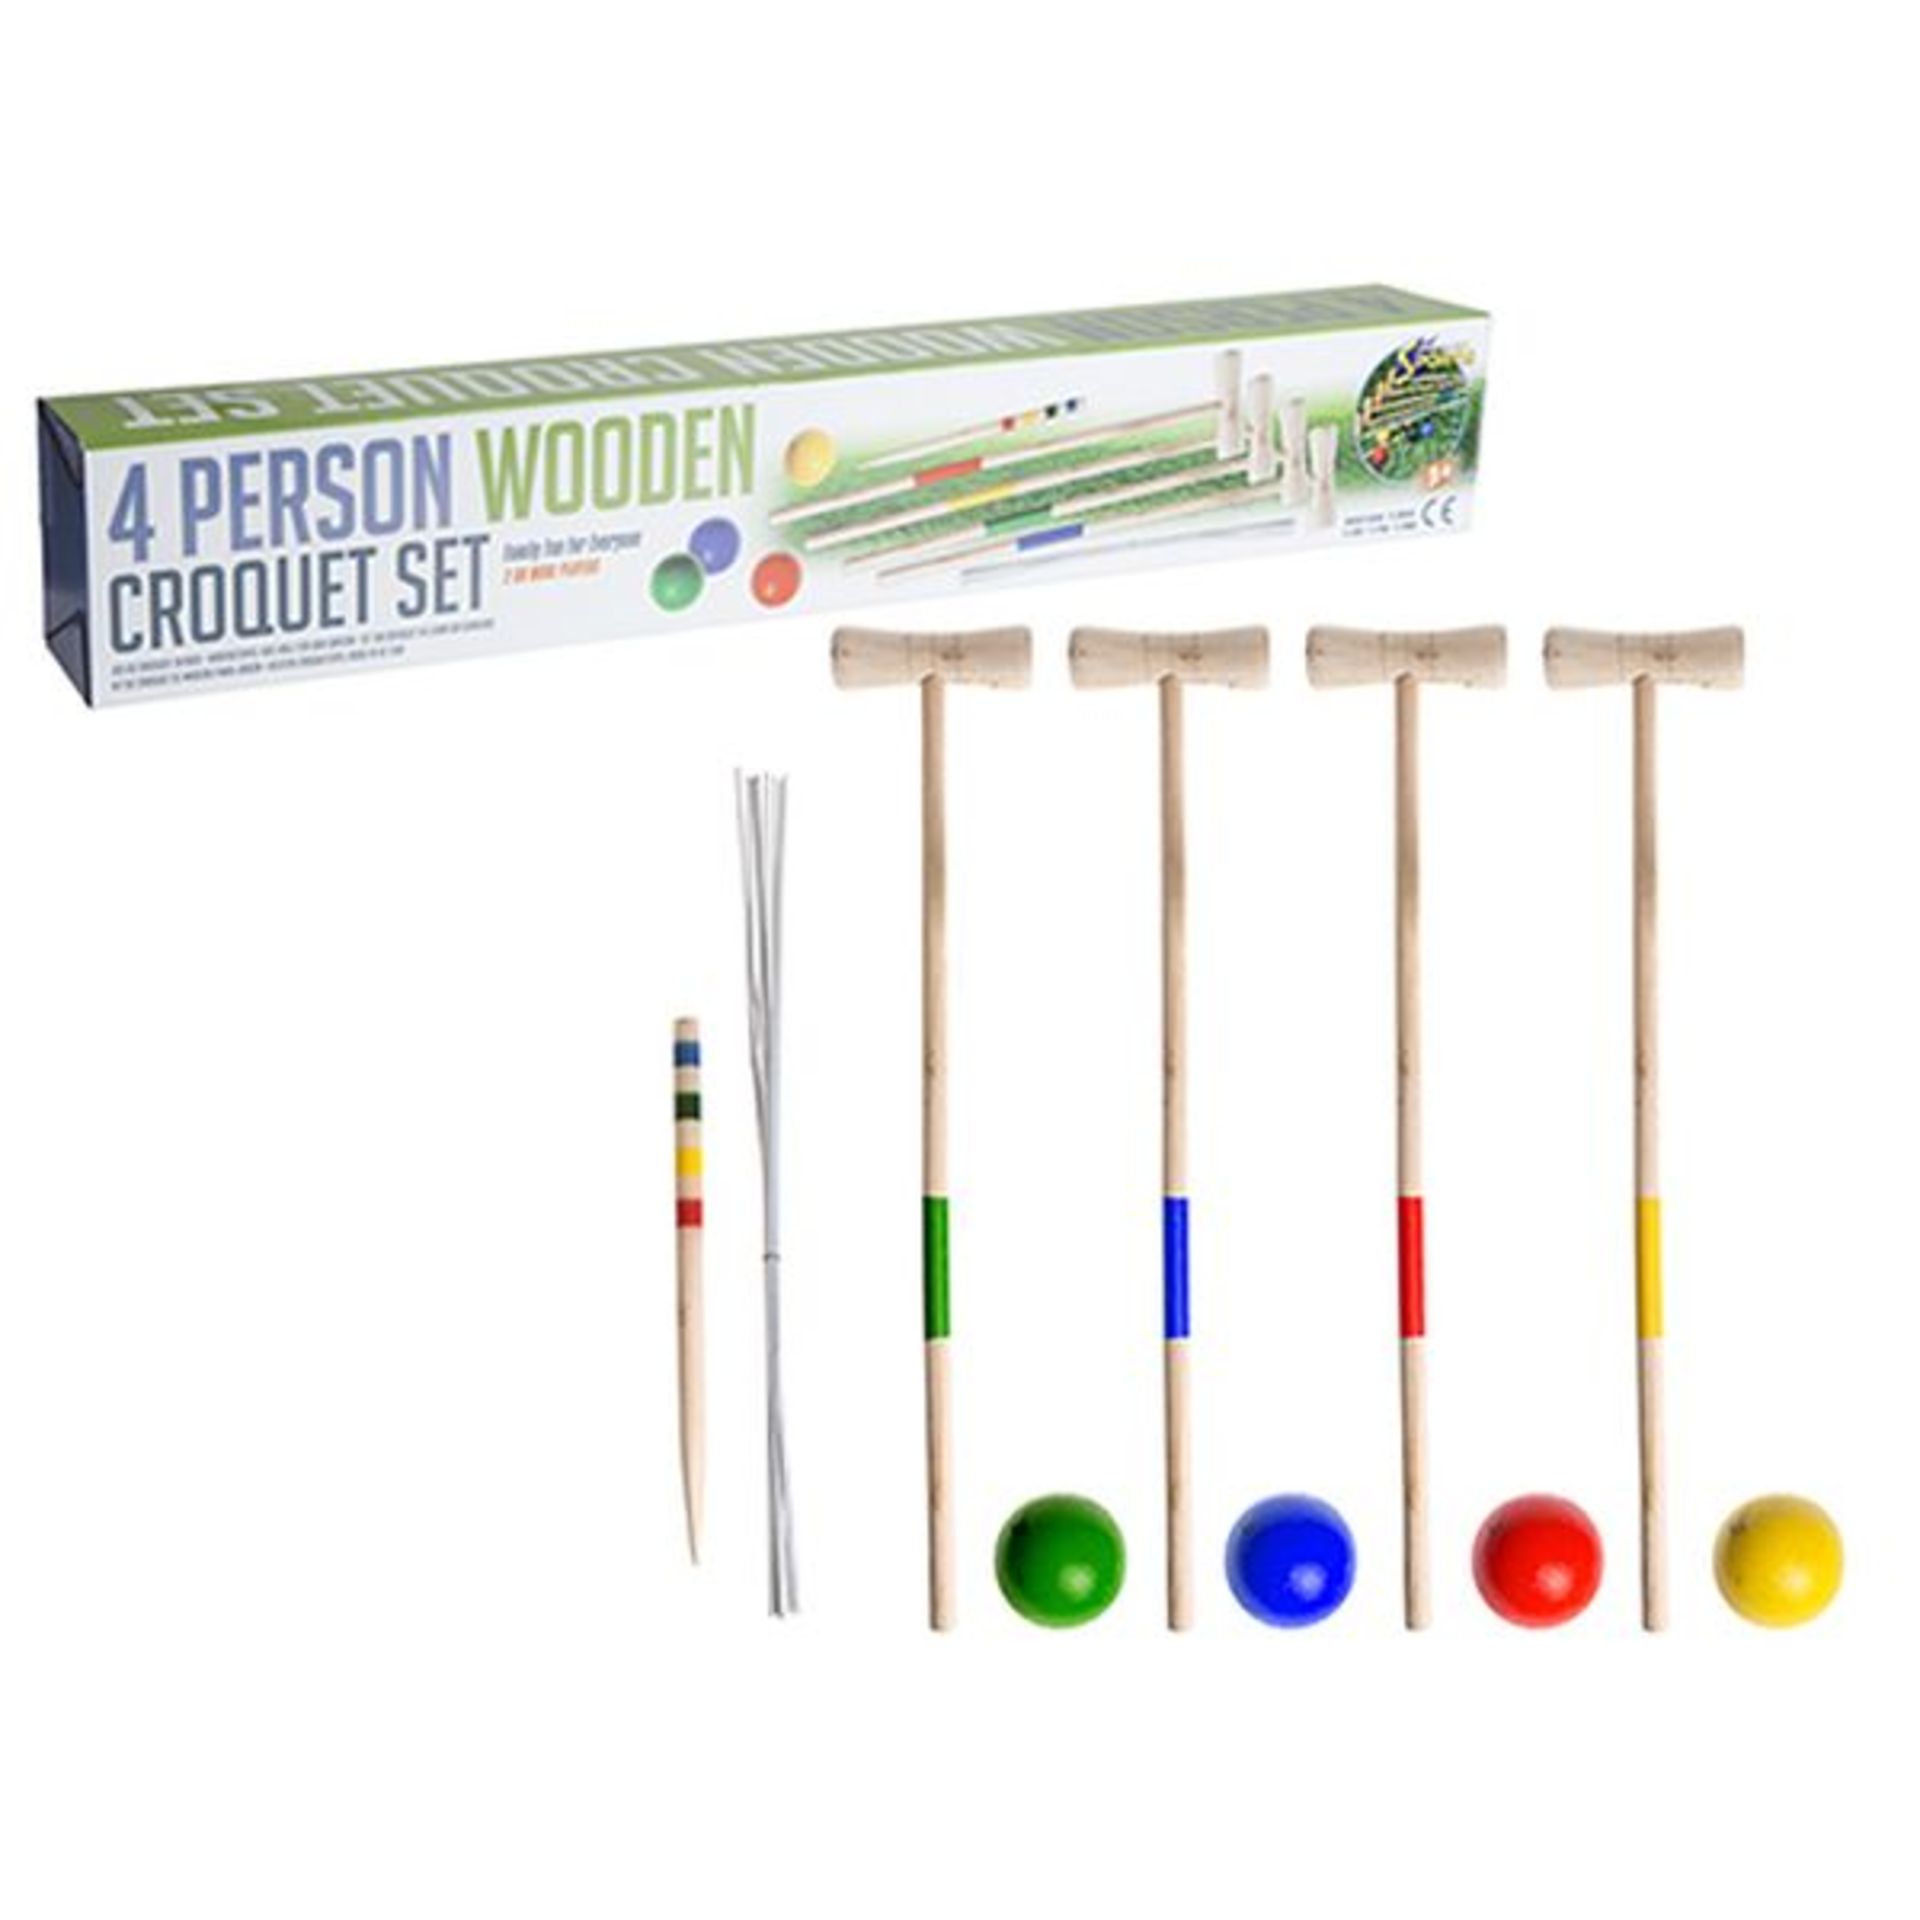 V Brand New Premier Sports Four Person Wooden Croquet Set